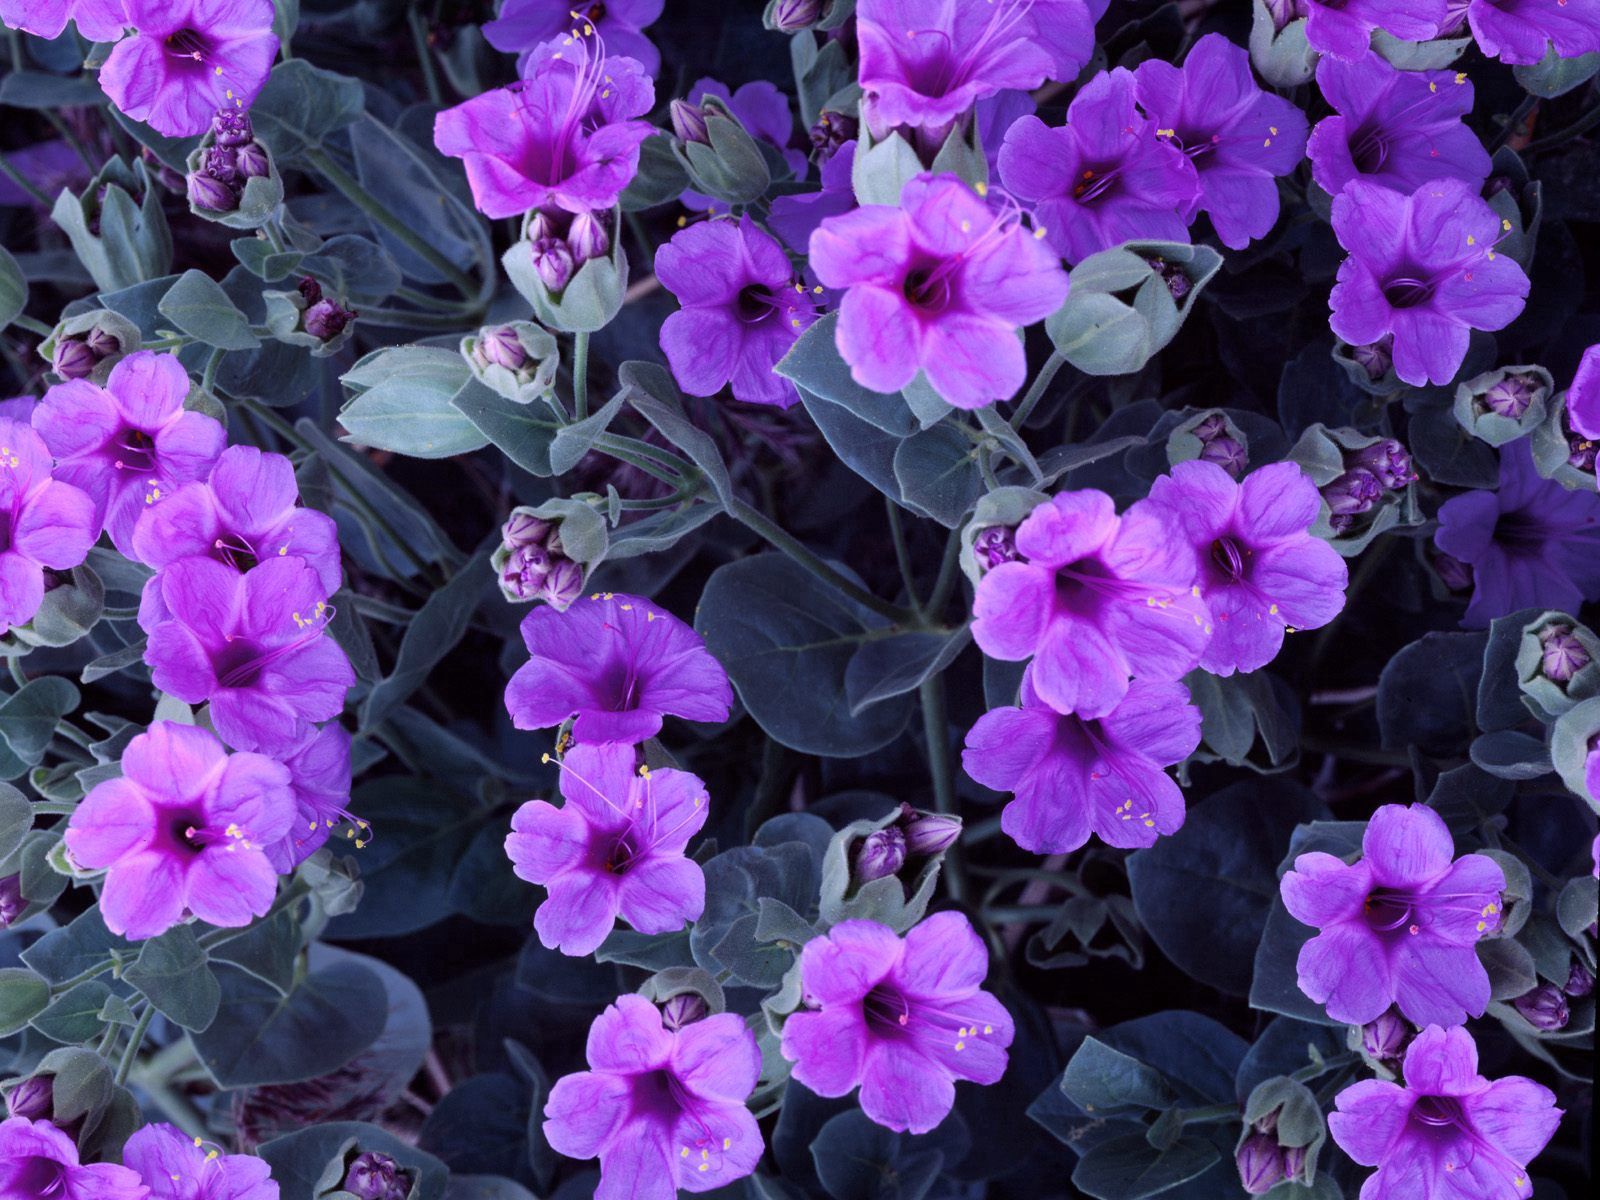 flower bed, flowerbed, flowers, lilac, purple, garden, stamens